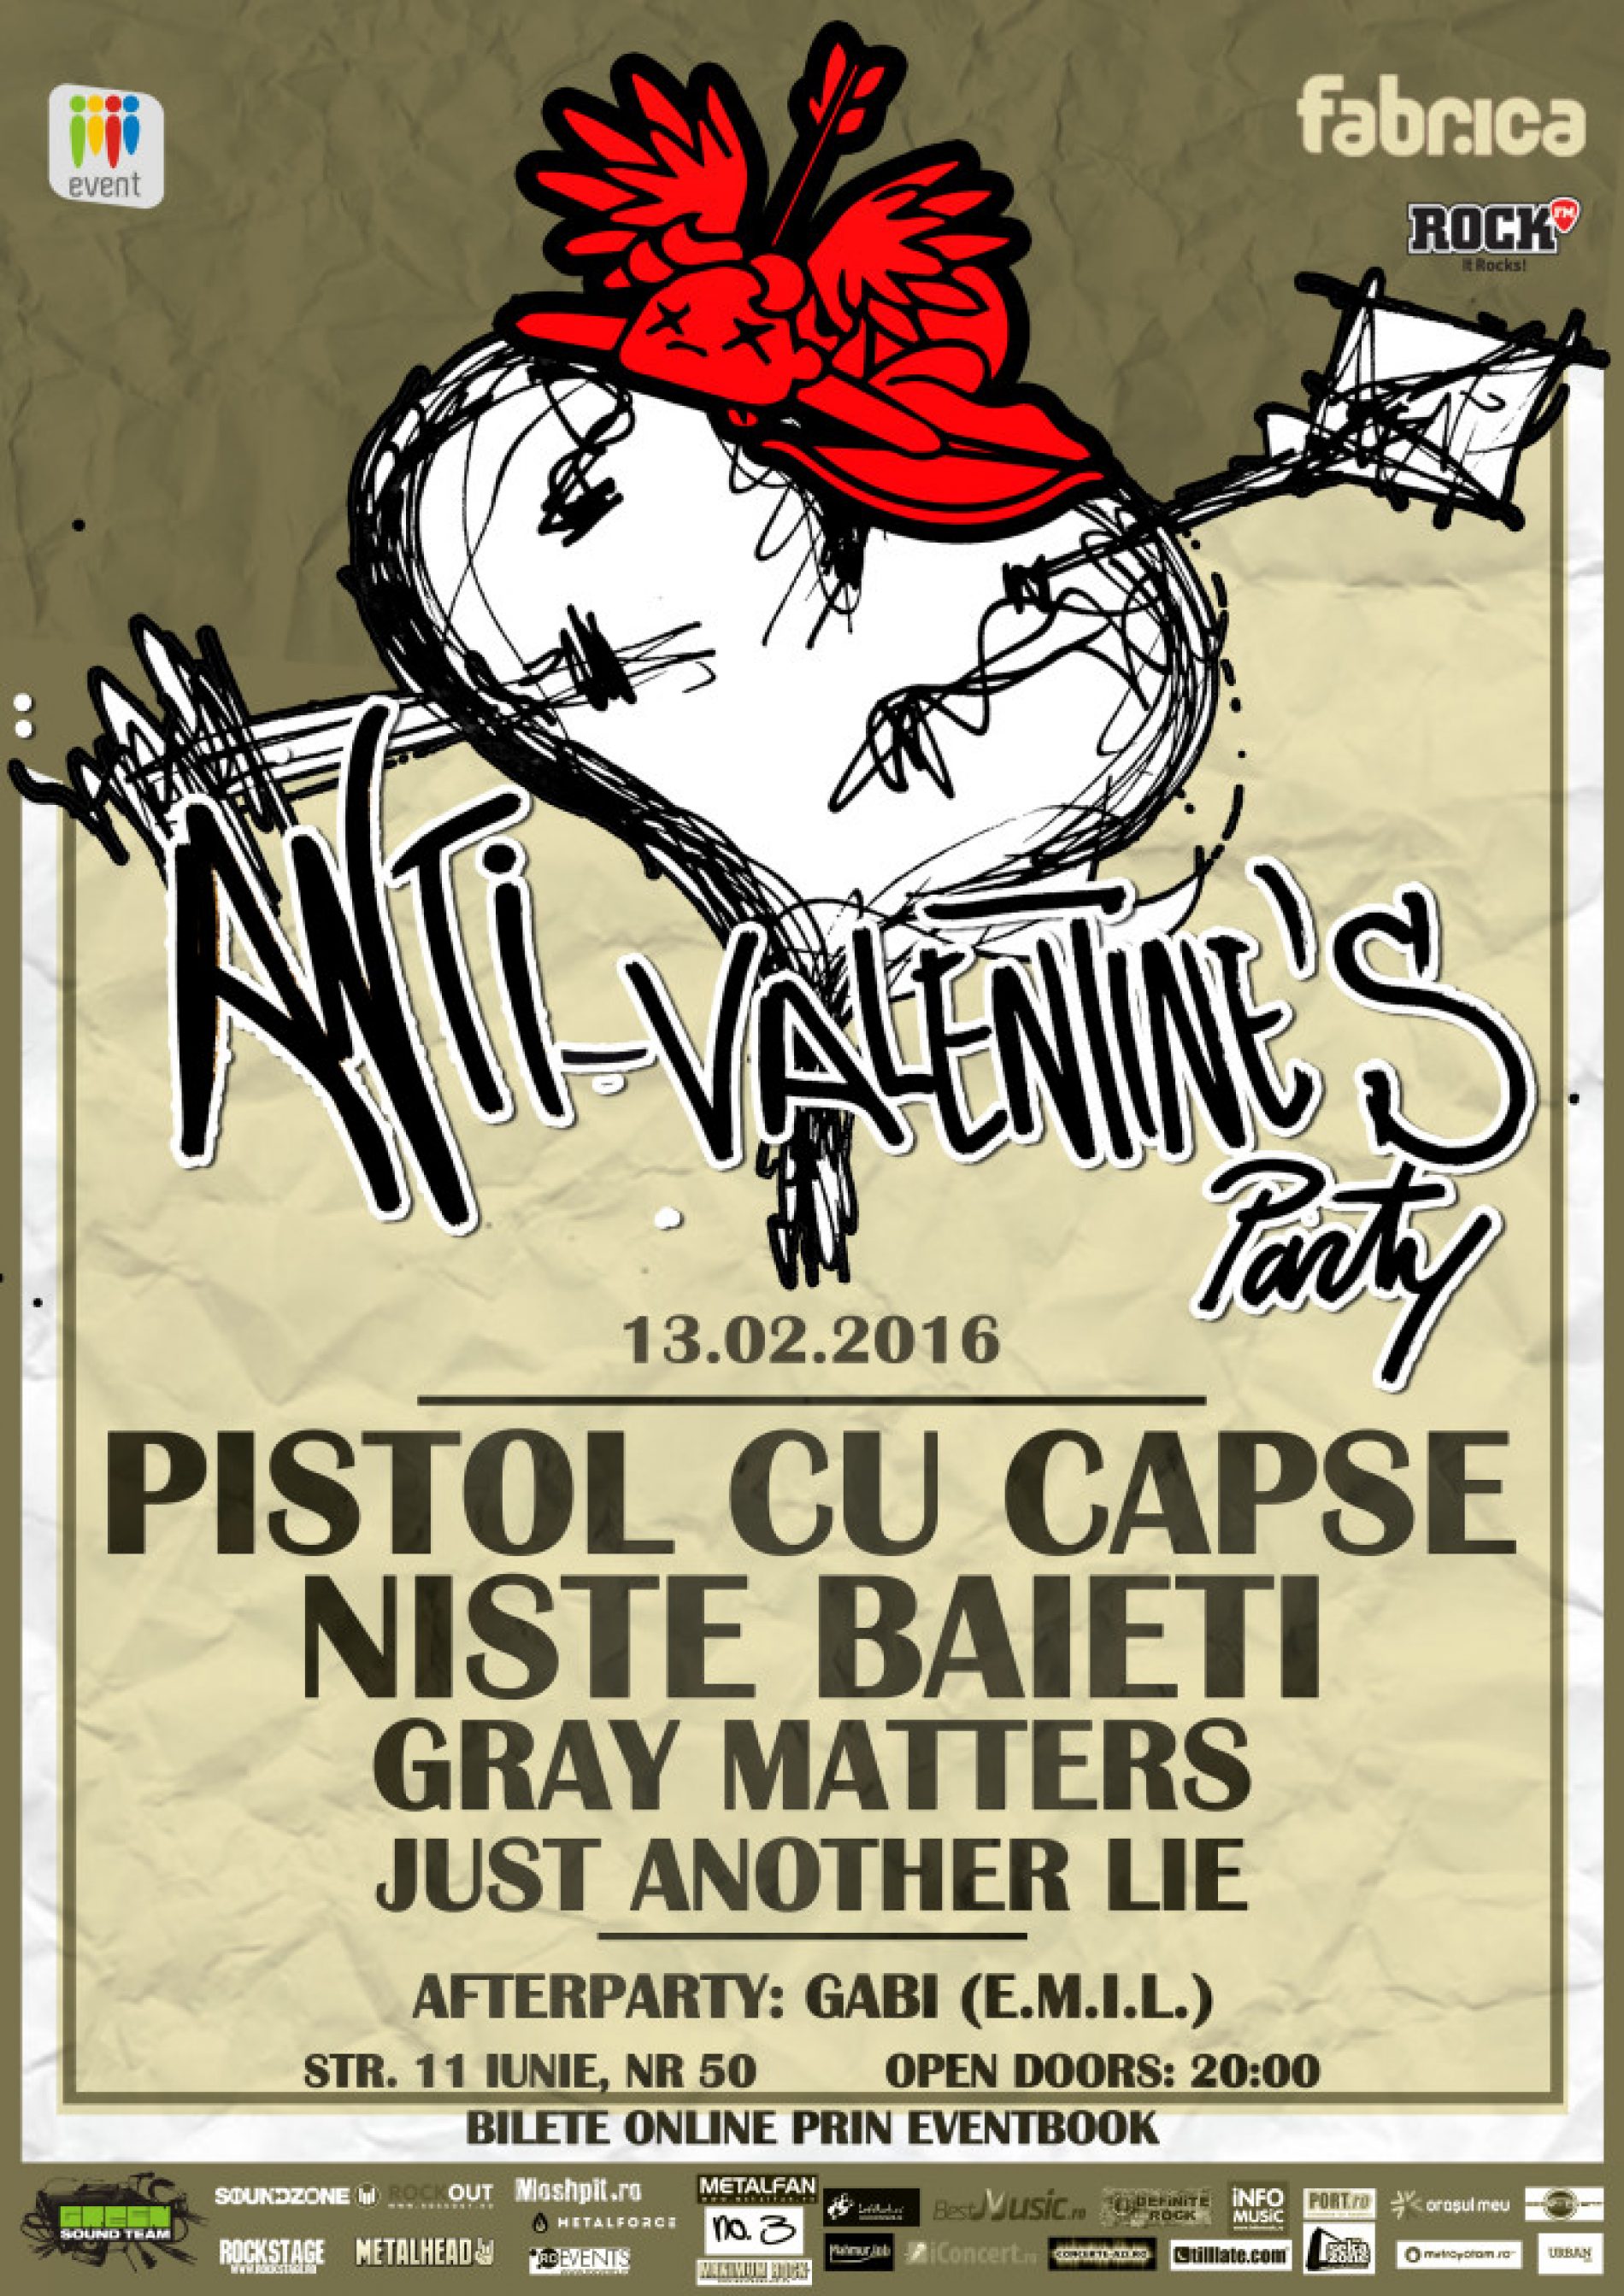 AntiValentin: Concert Pistol Cu Capse, Niste Baieti, Gray Matters, Just Another Lie @ fabrica